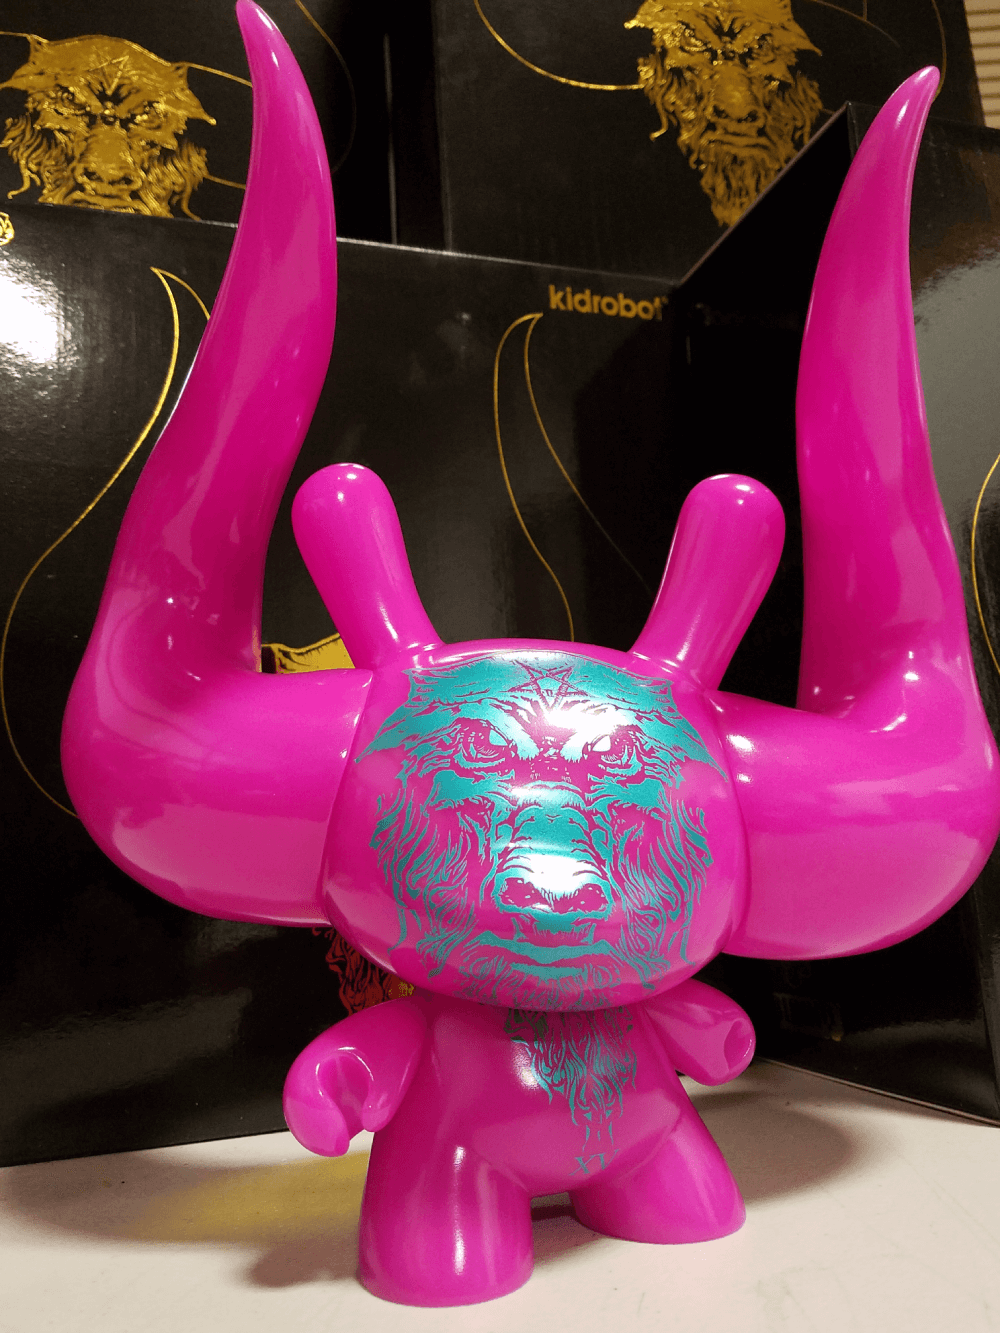 pink-devil-kidrobot-dunny-godmachine-iamretro